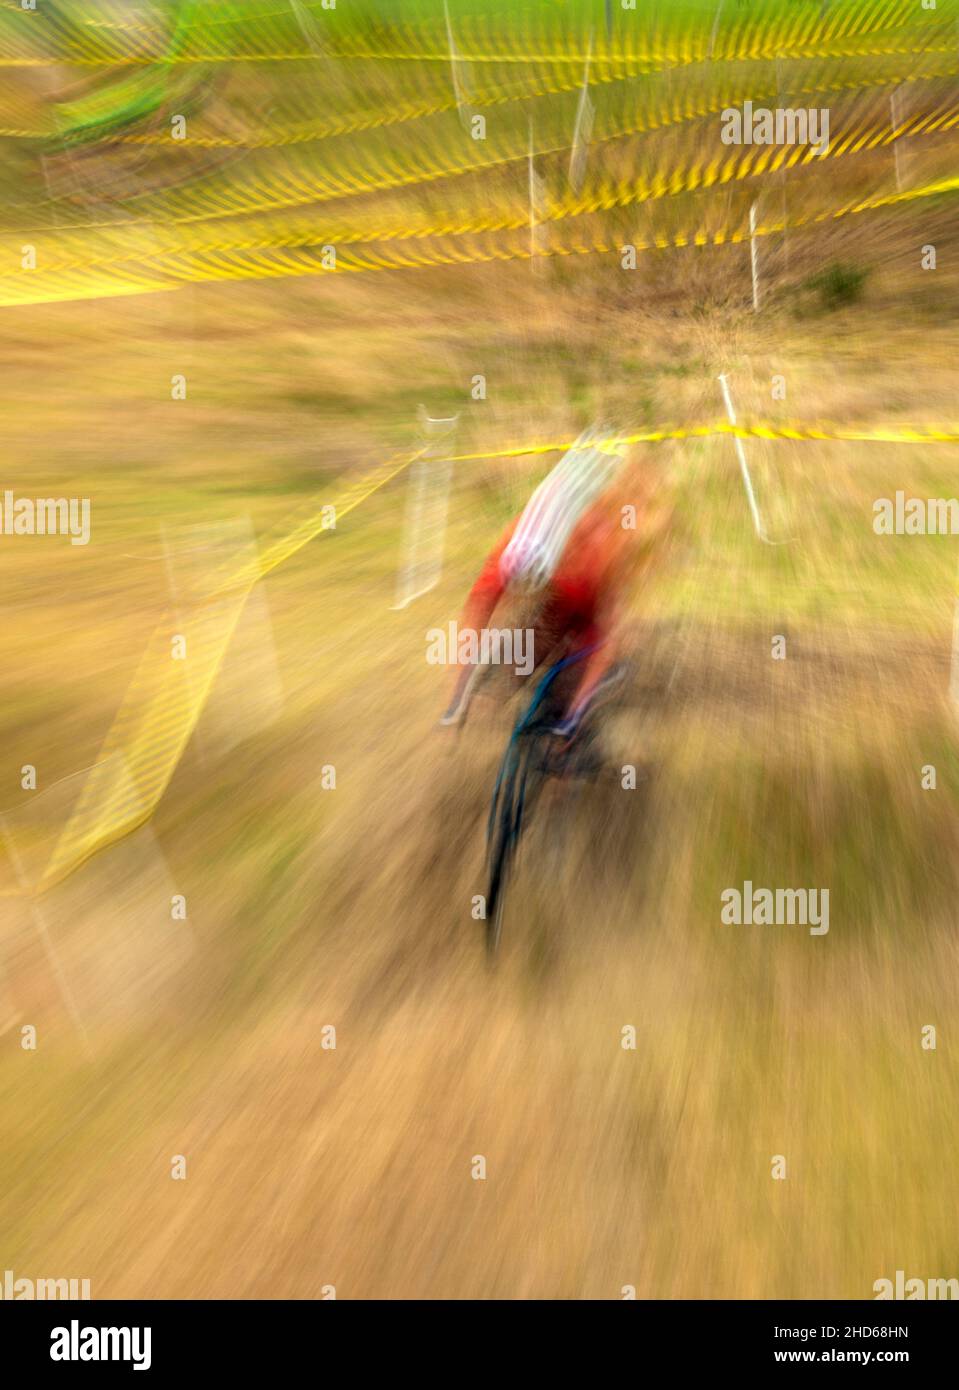 WA20596-00....WASHINGTON - Blured abstract of a men's cyclocross race. Stock Photo